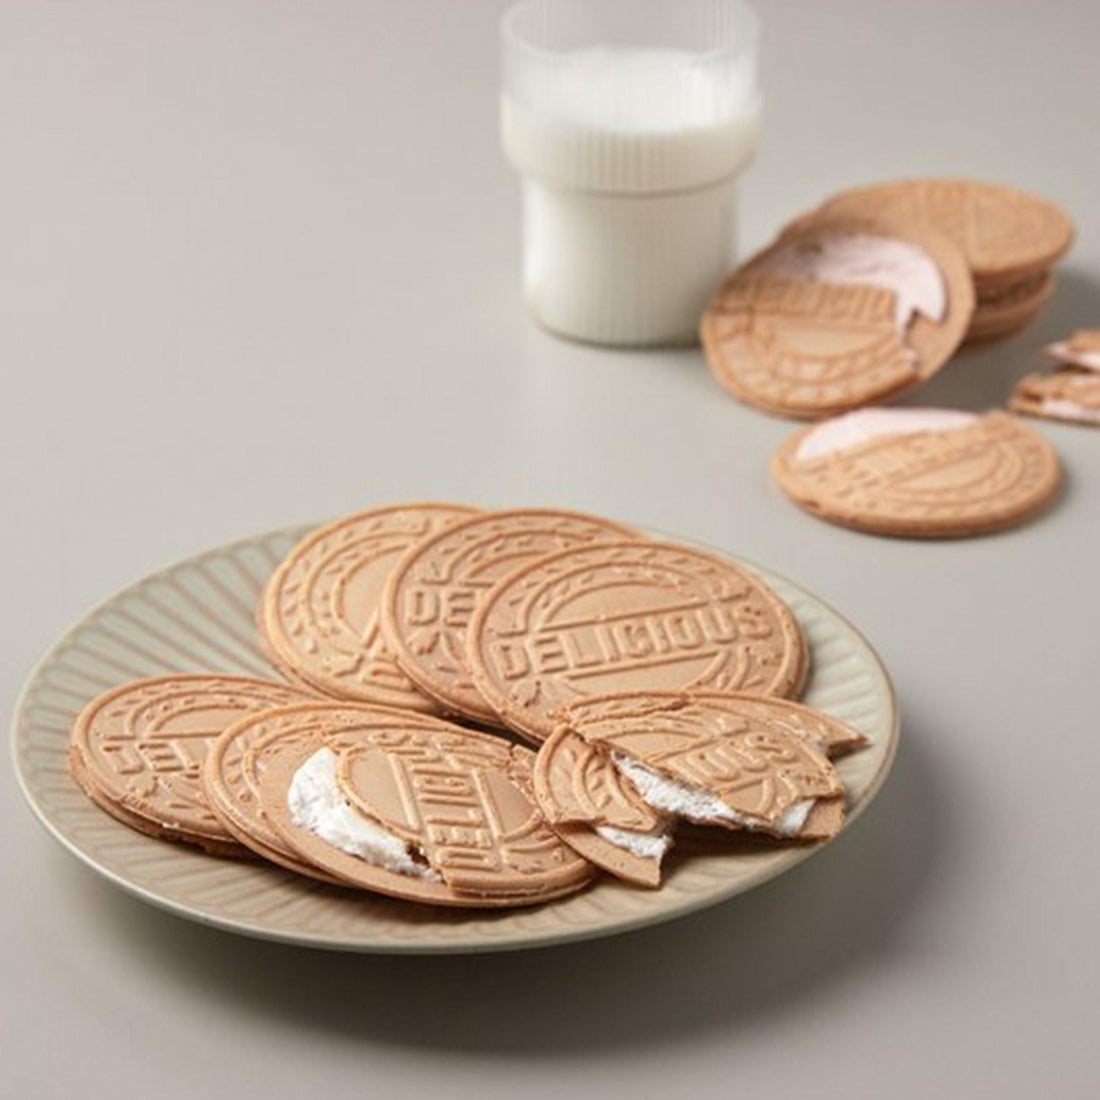 Chung Woo European Premium Cookies 3.6oz(102g) - Anytime Basket